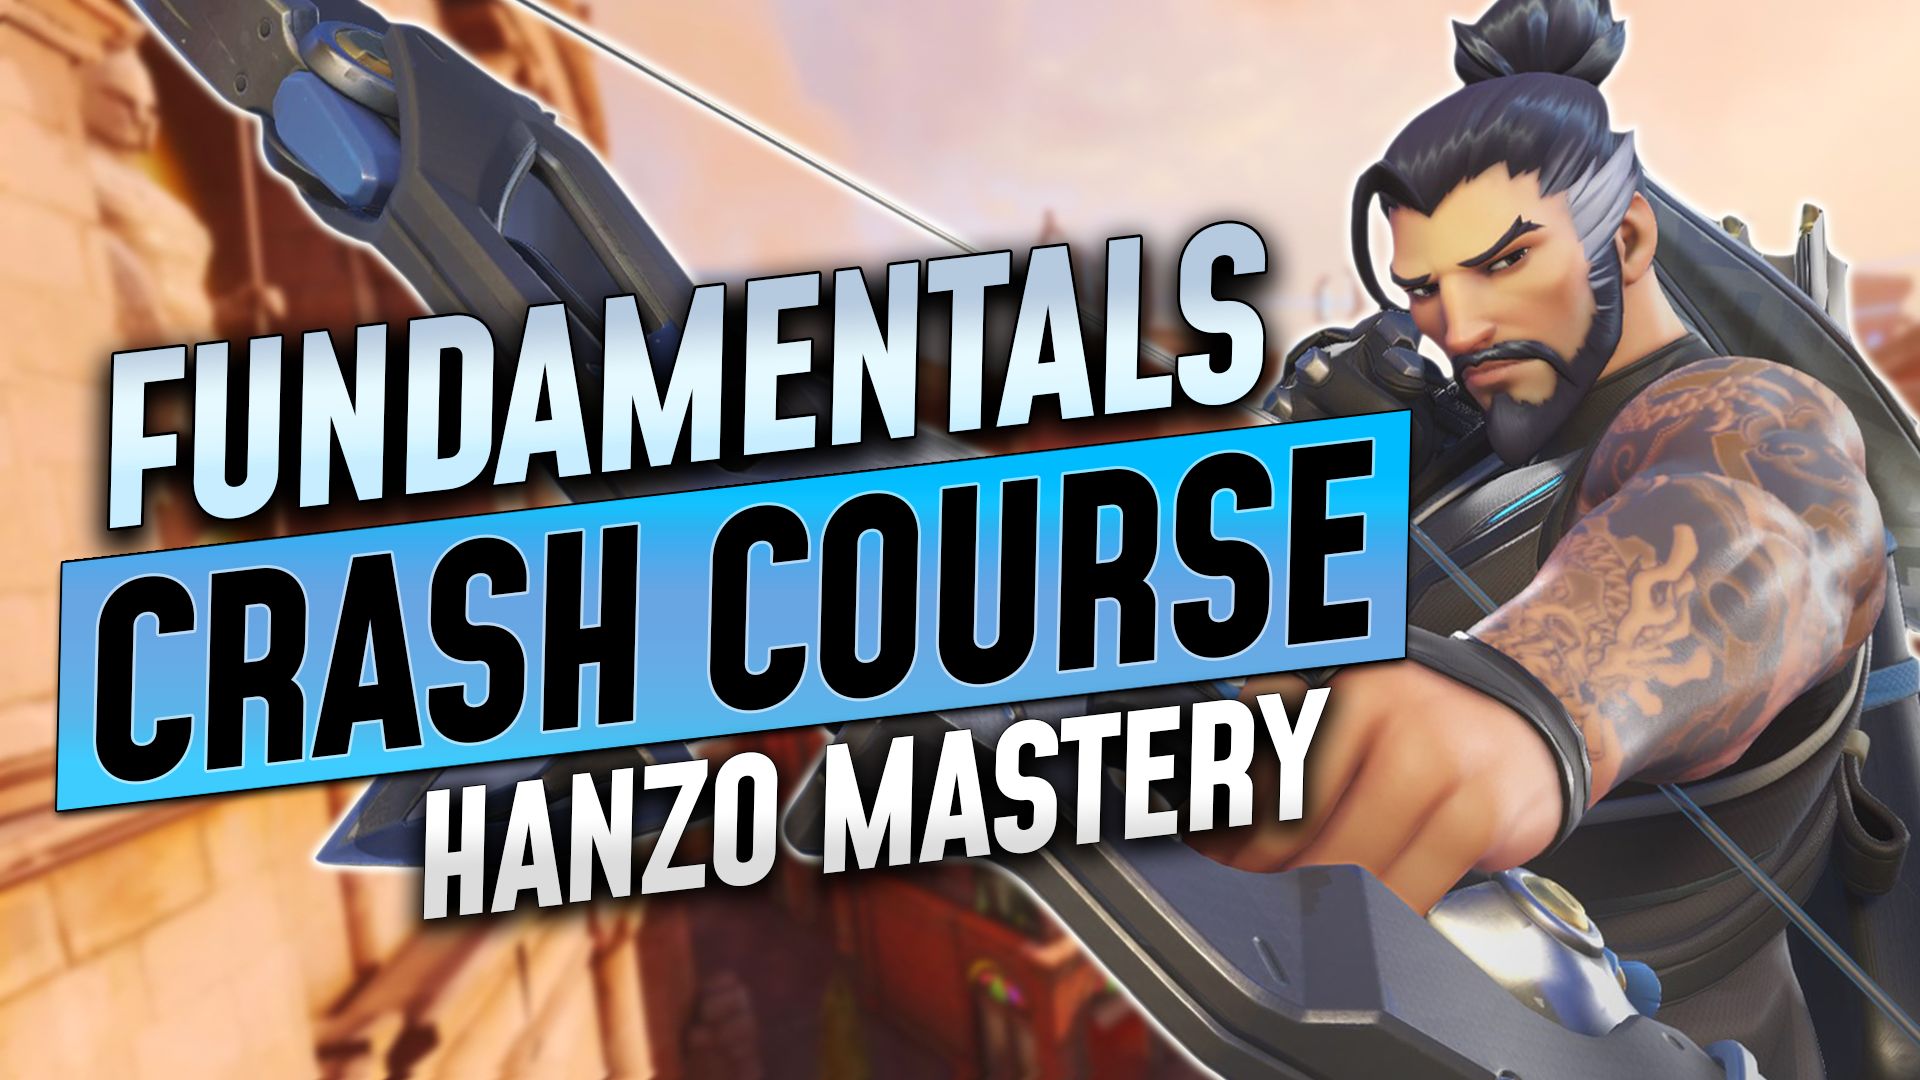 The Perfect Hanzo Aim Training Warmup - GameLeap